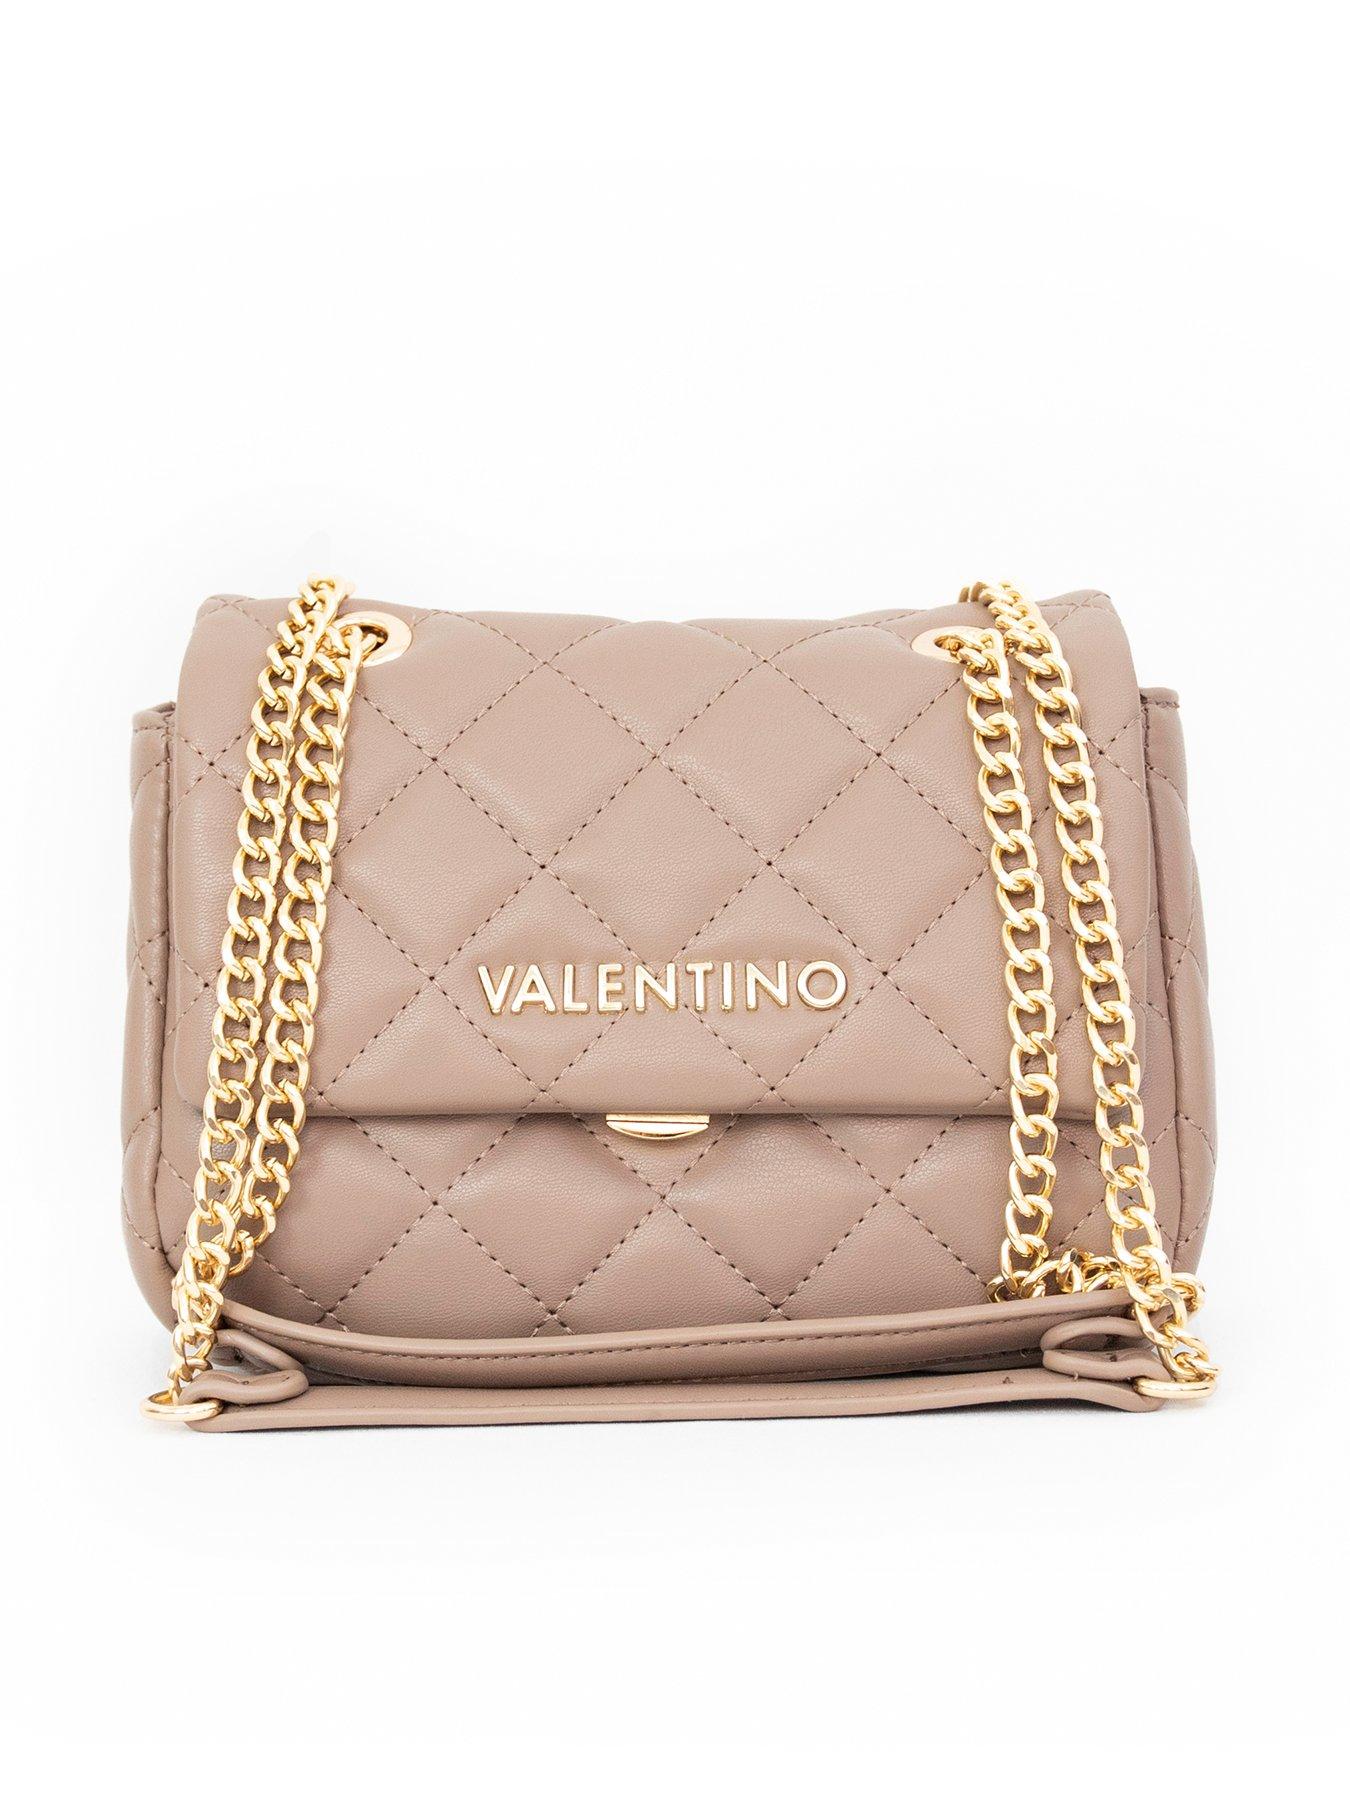 Valentino Bags Valentino Ocarina Shoulder Bag - Beige for Women